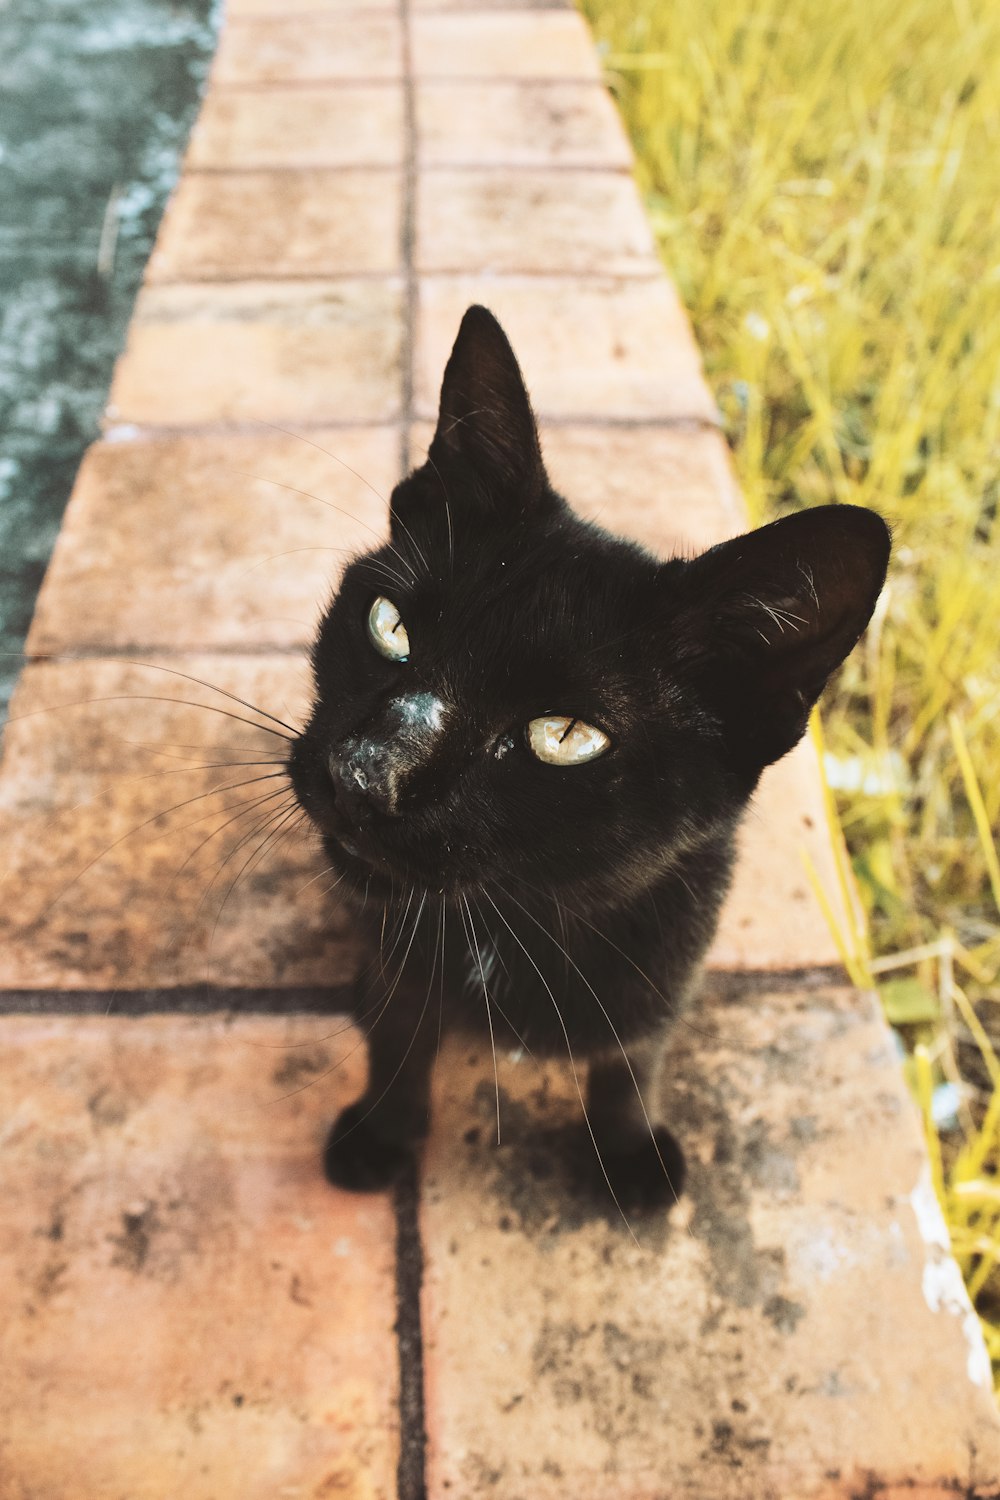 a black cat lying on a brick surface